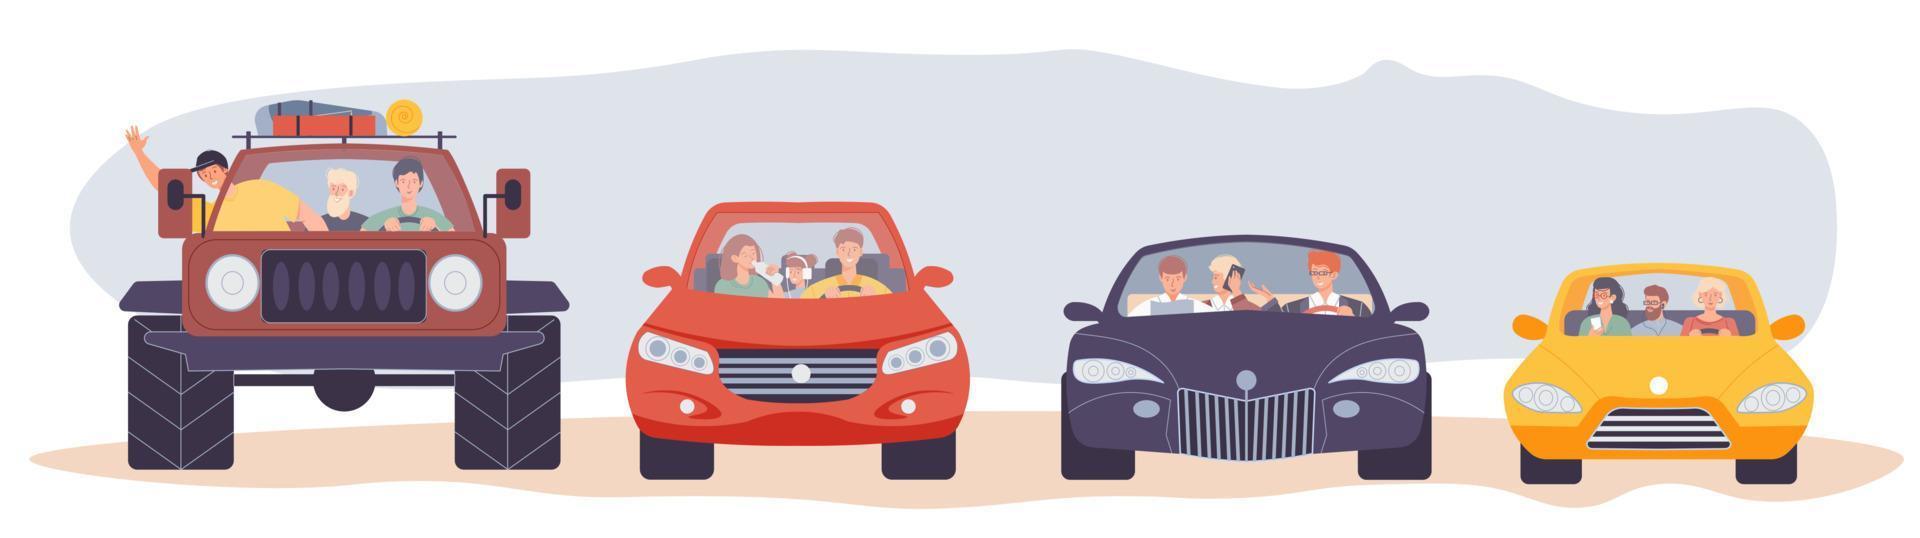 carsharing carpooling consumo colaborativo vector